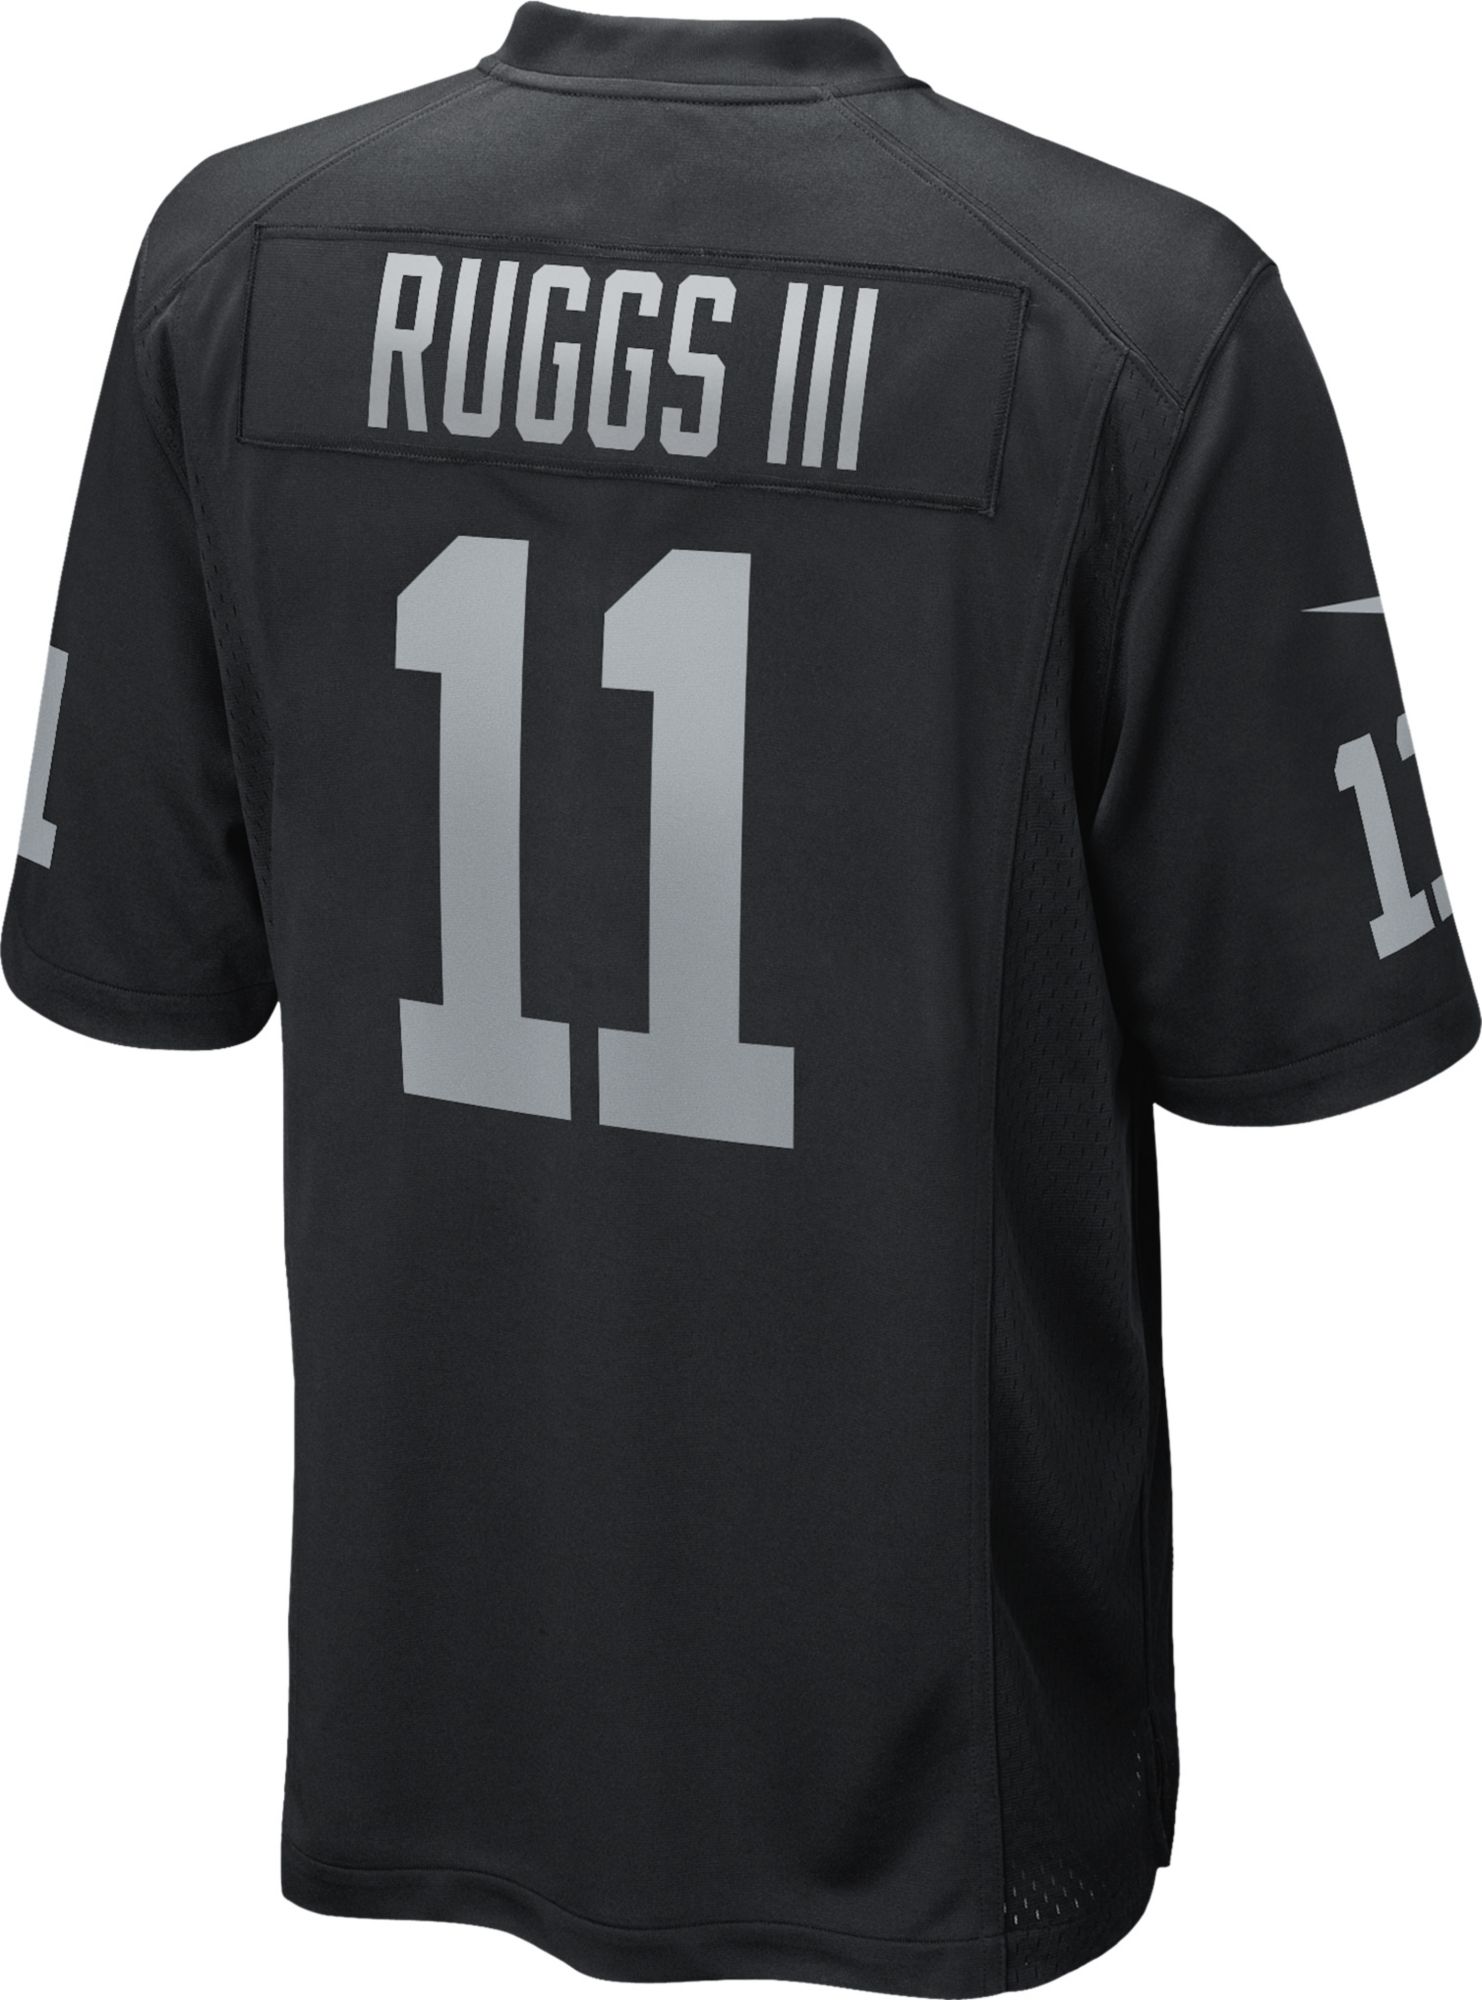 ruggs iii raiders jersey